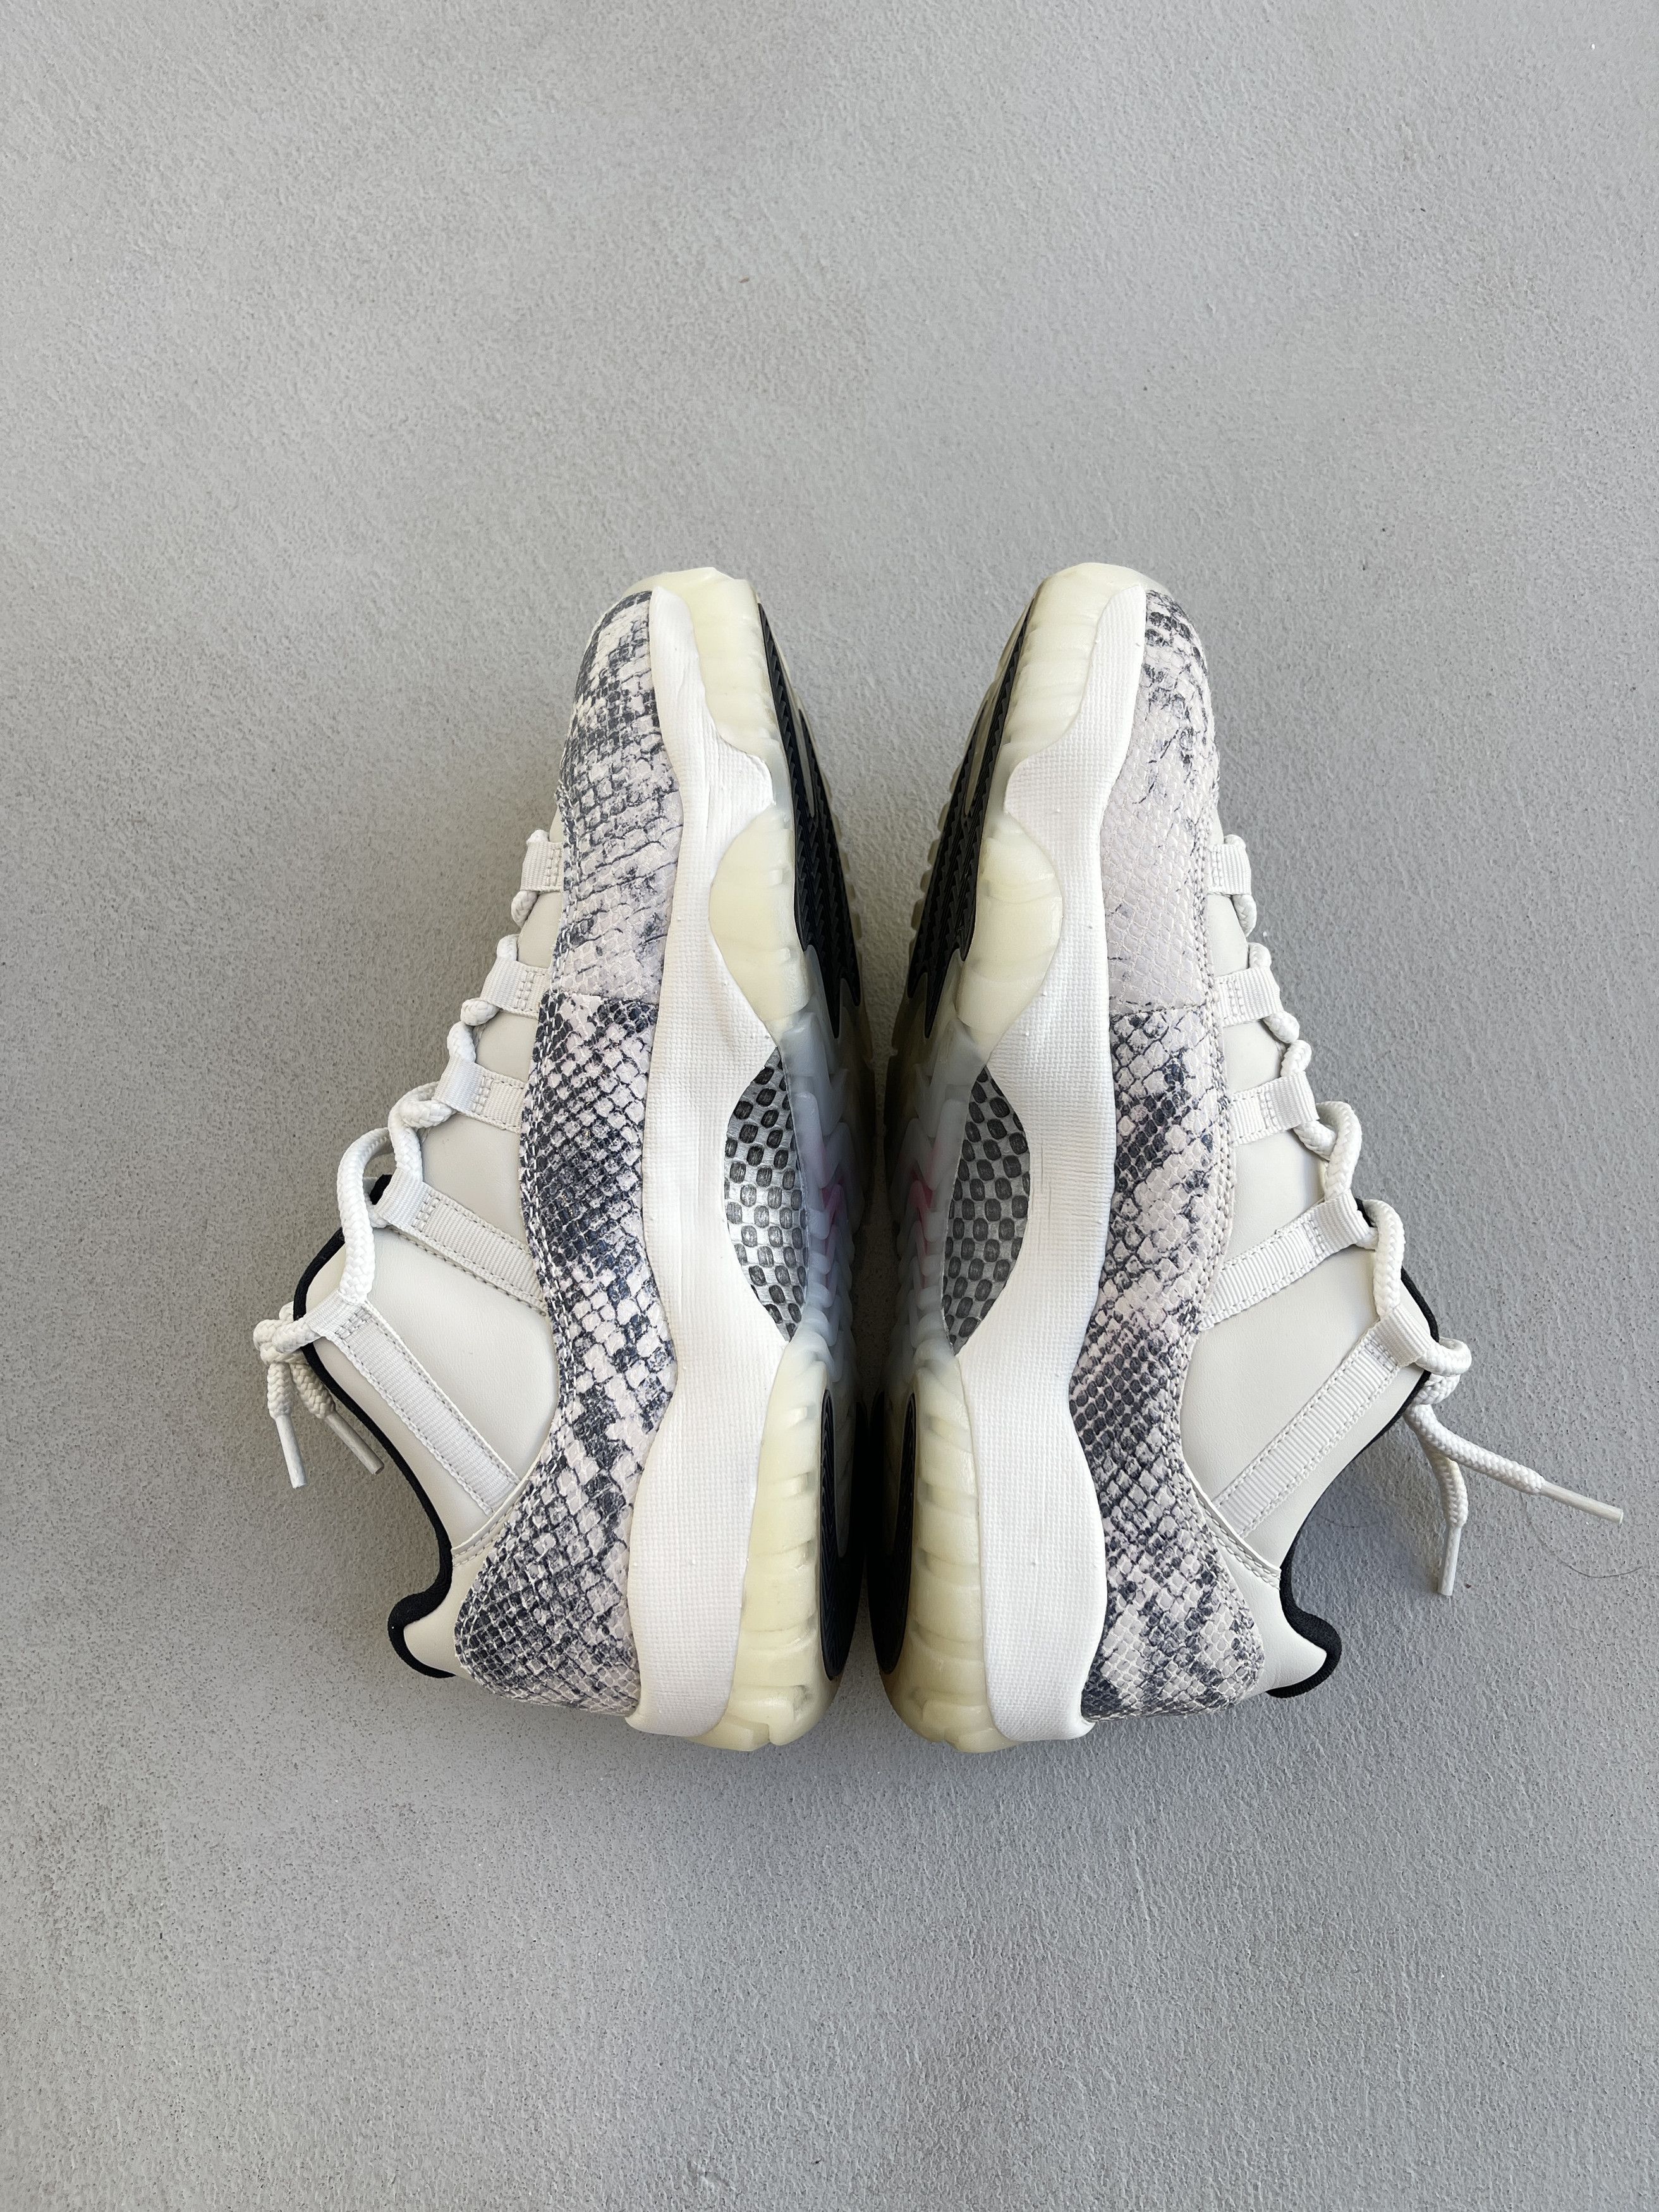 🔥 Nike Air Jordan 11 Retro Low Snake Light Bone 2019 - 7